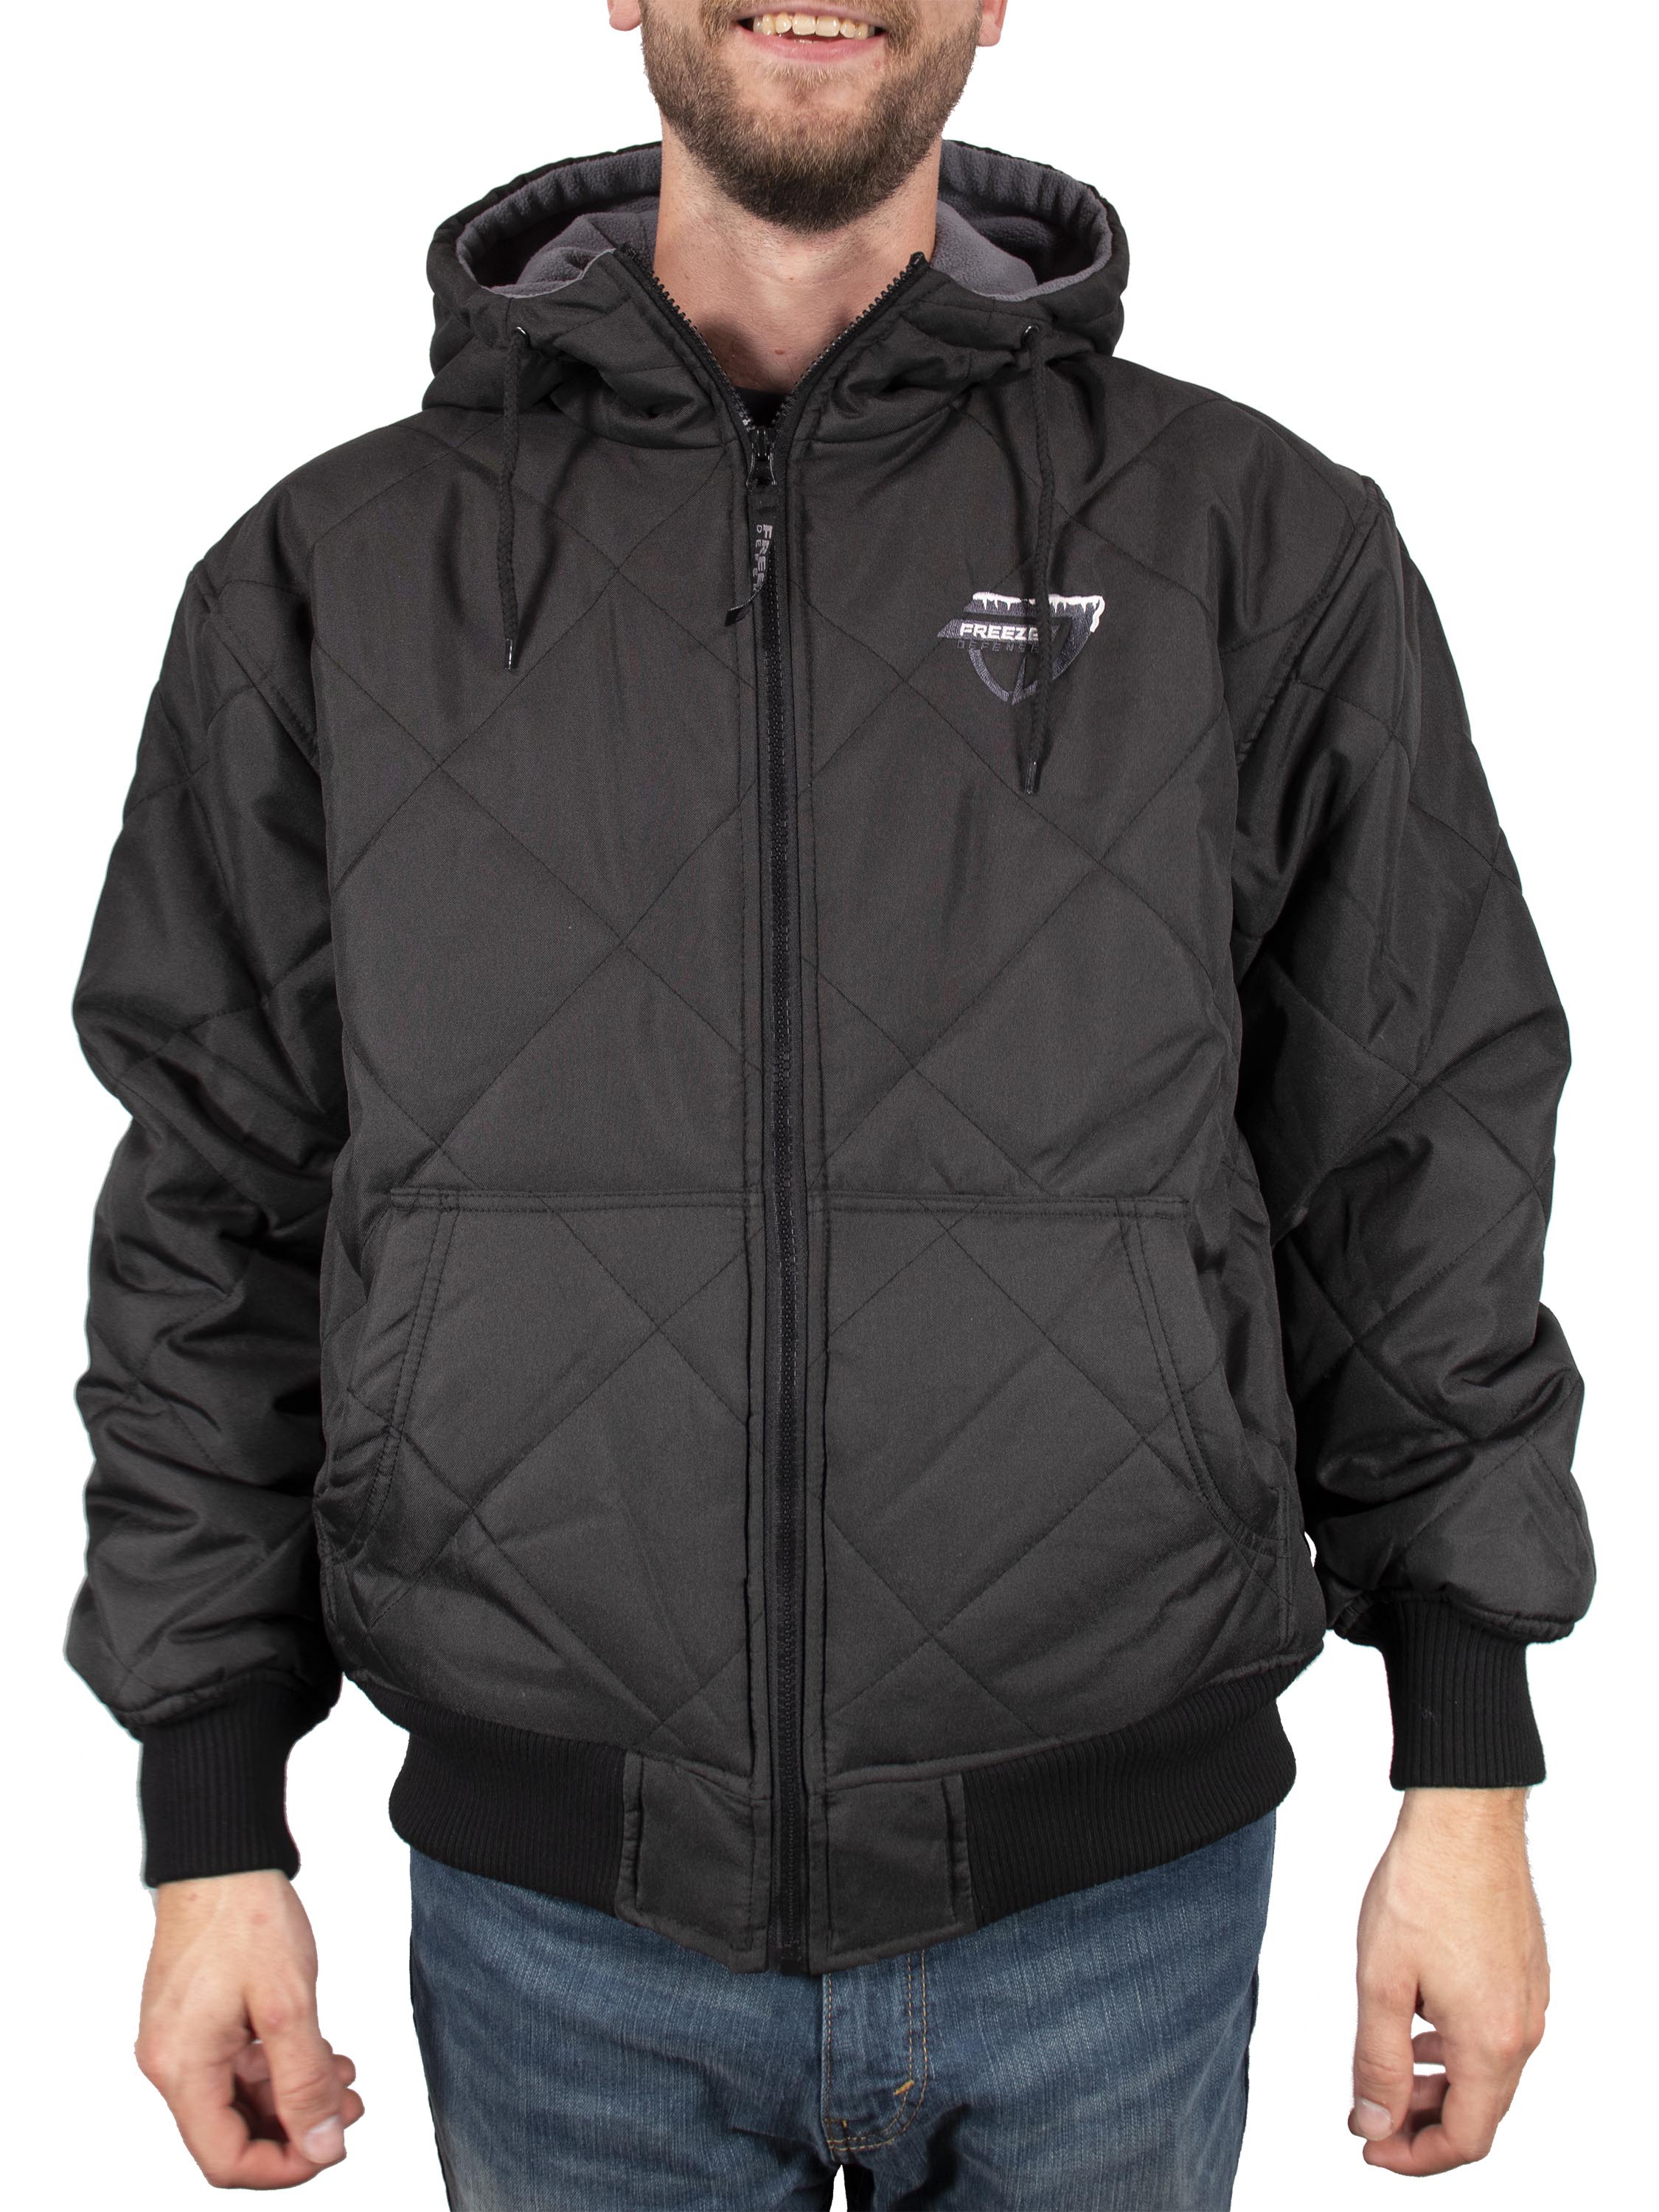 Smeiling Mens Winter Warm Front-Zip Fleece Lined Jacket Coat Outwear